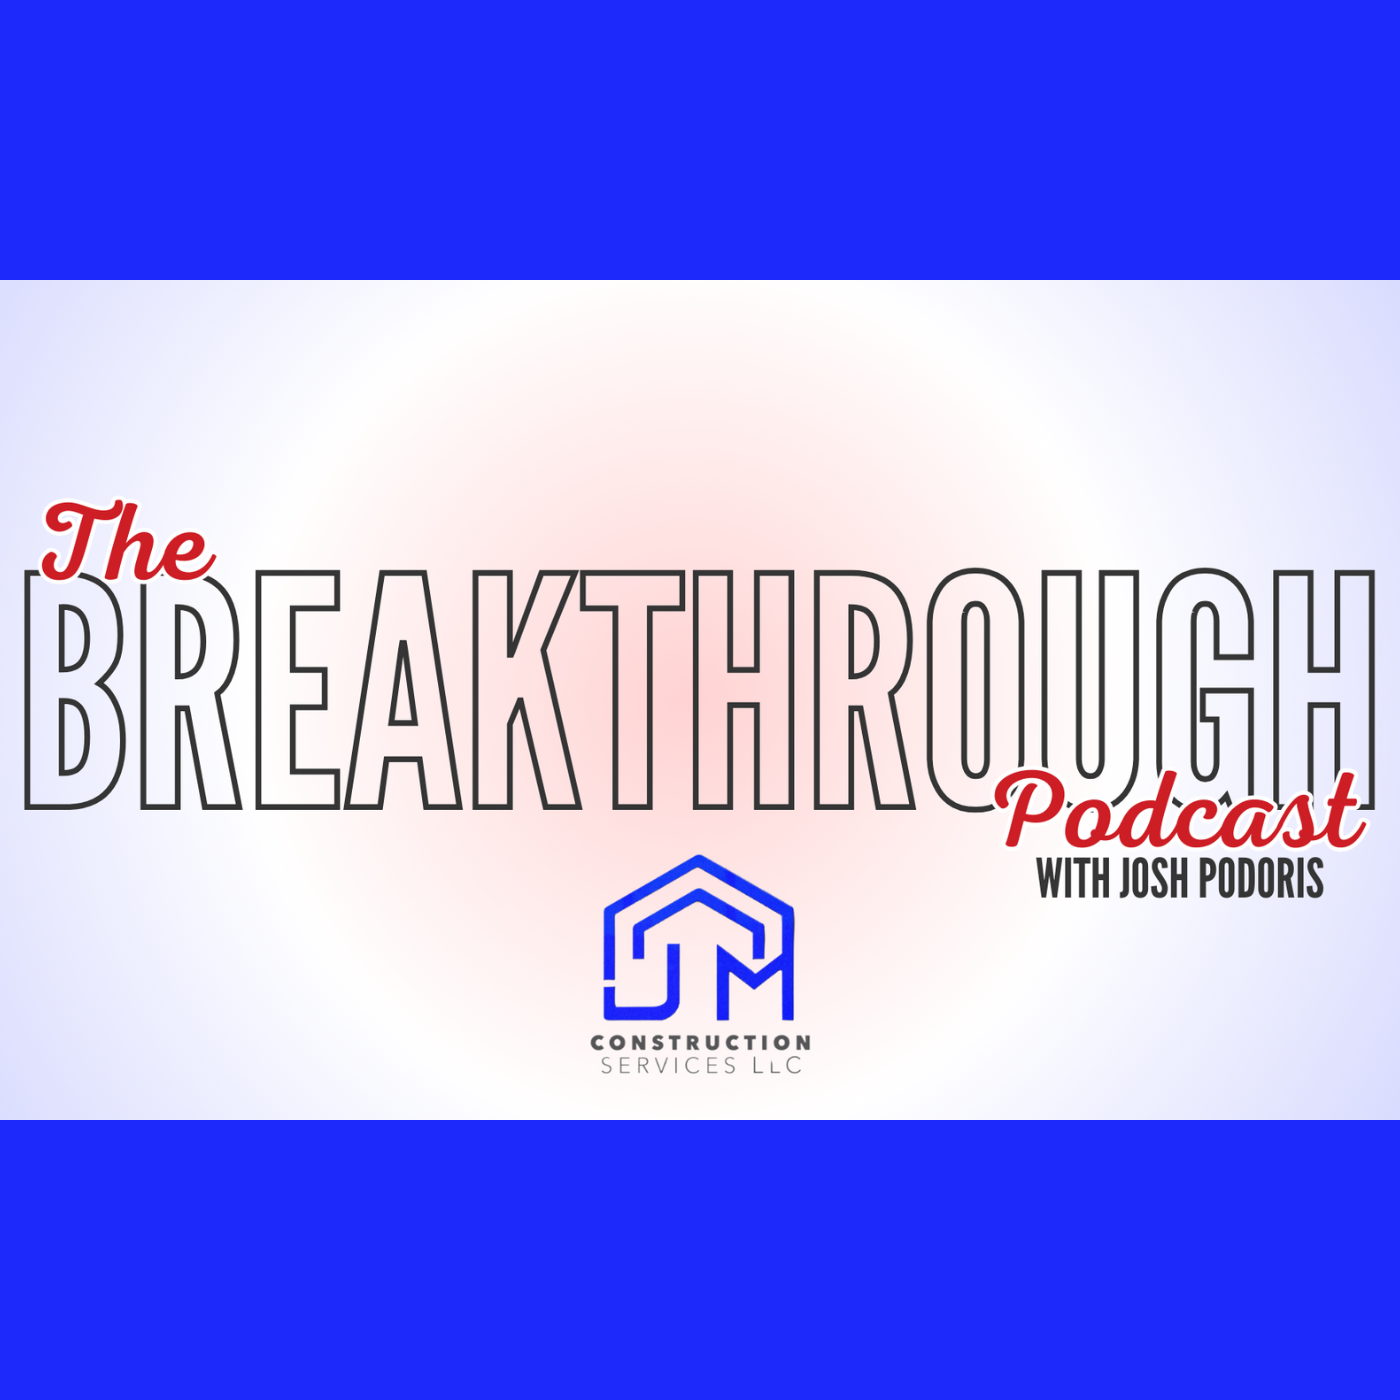 The Breakthrough Podcast with Josh Podoris